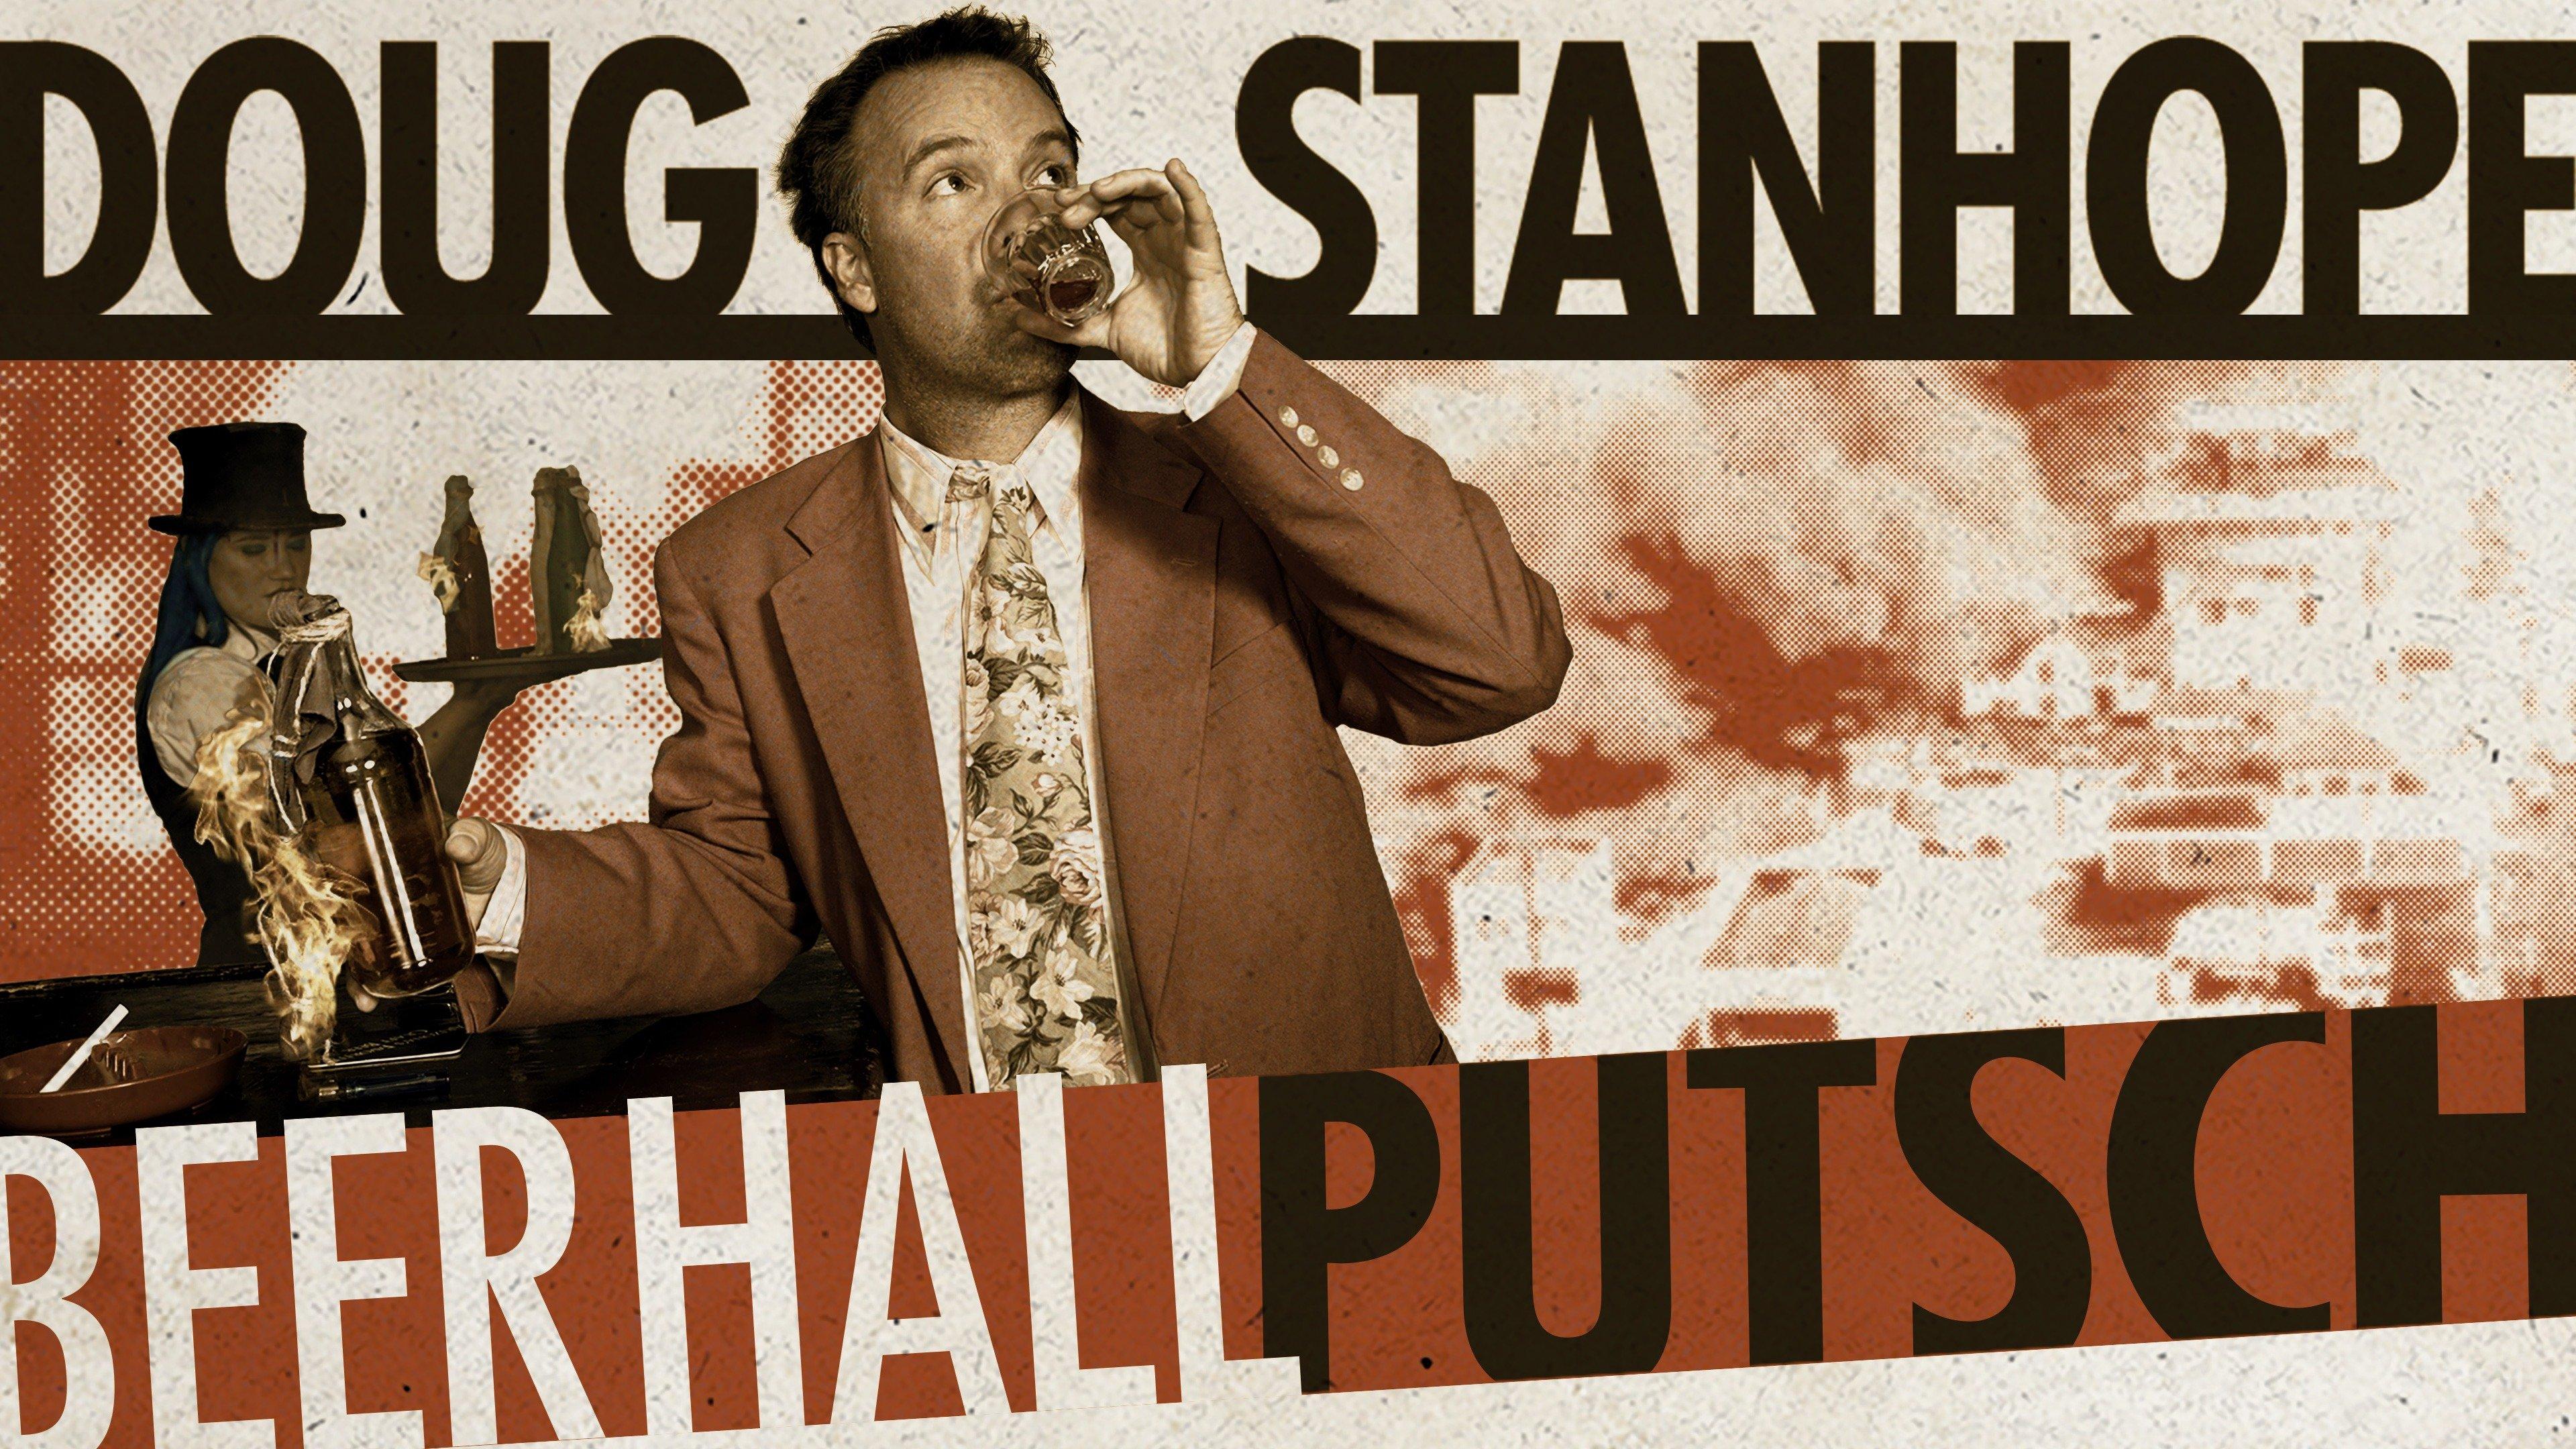 Doug stanhope beer hall putsch